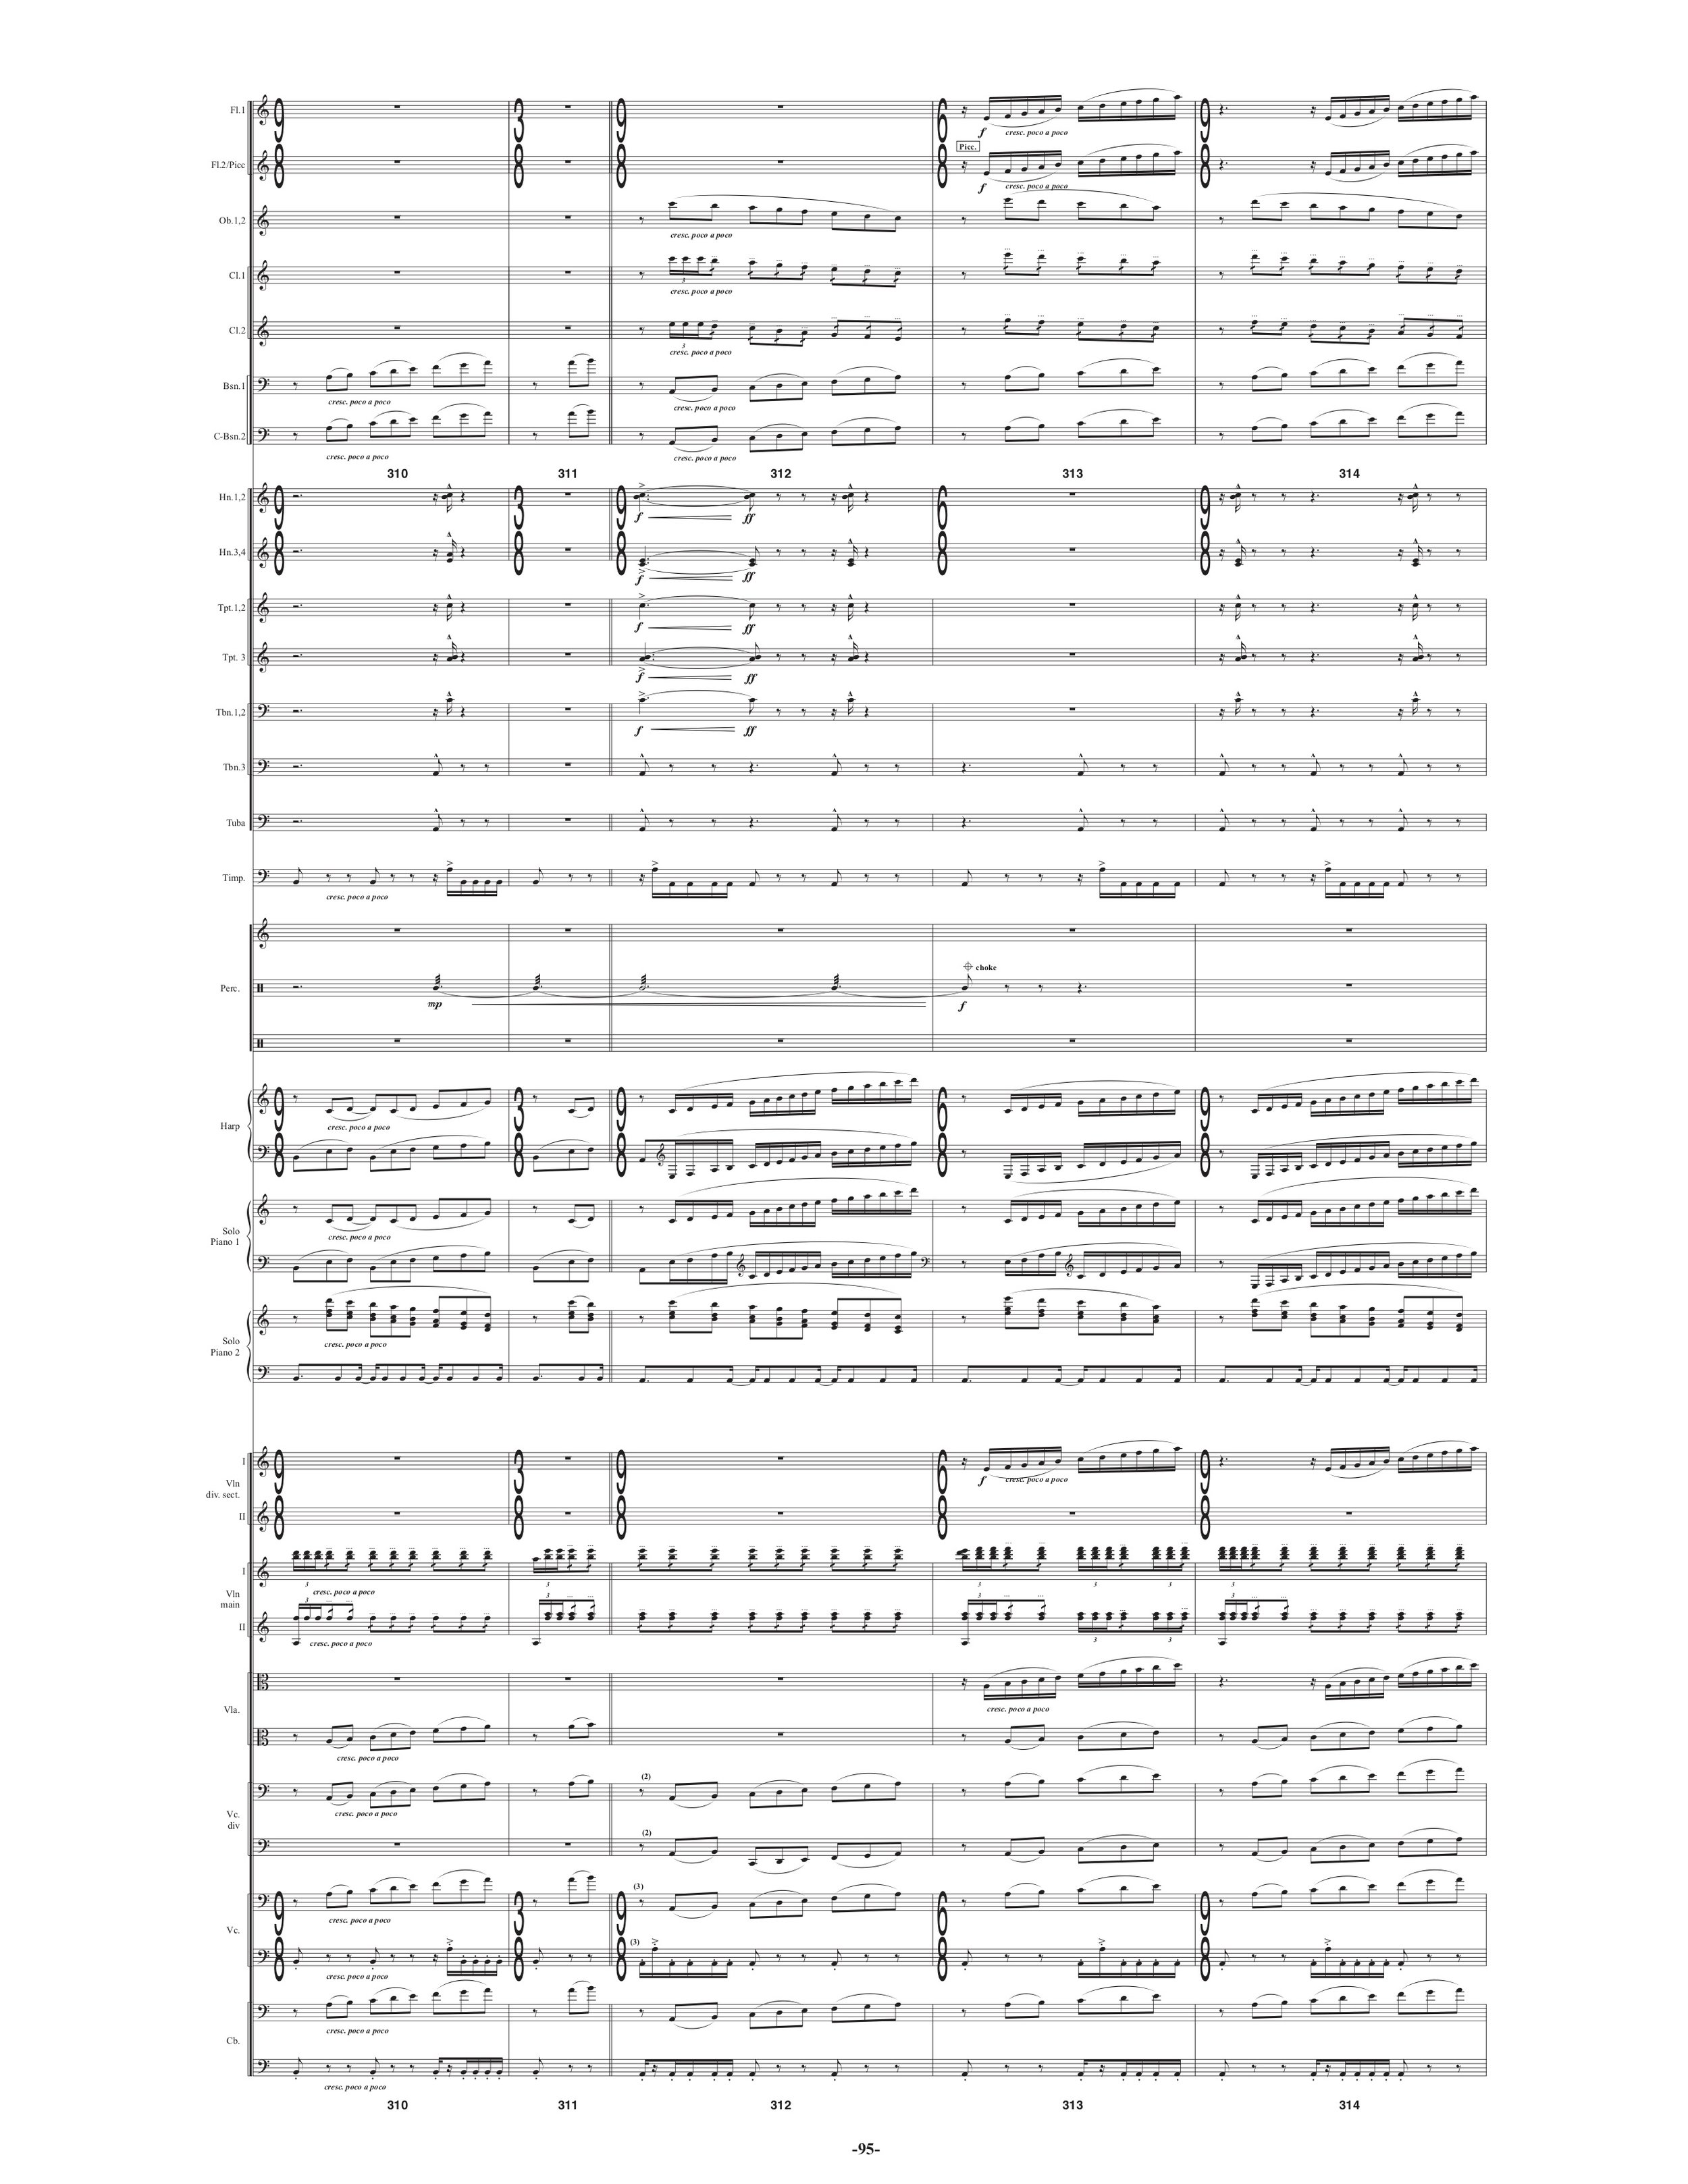 Symphony_Orch & 2 Pianos p100.jpg